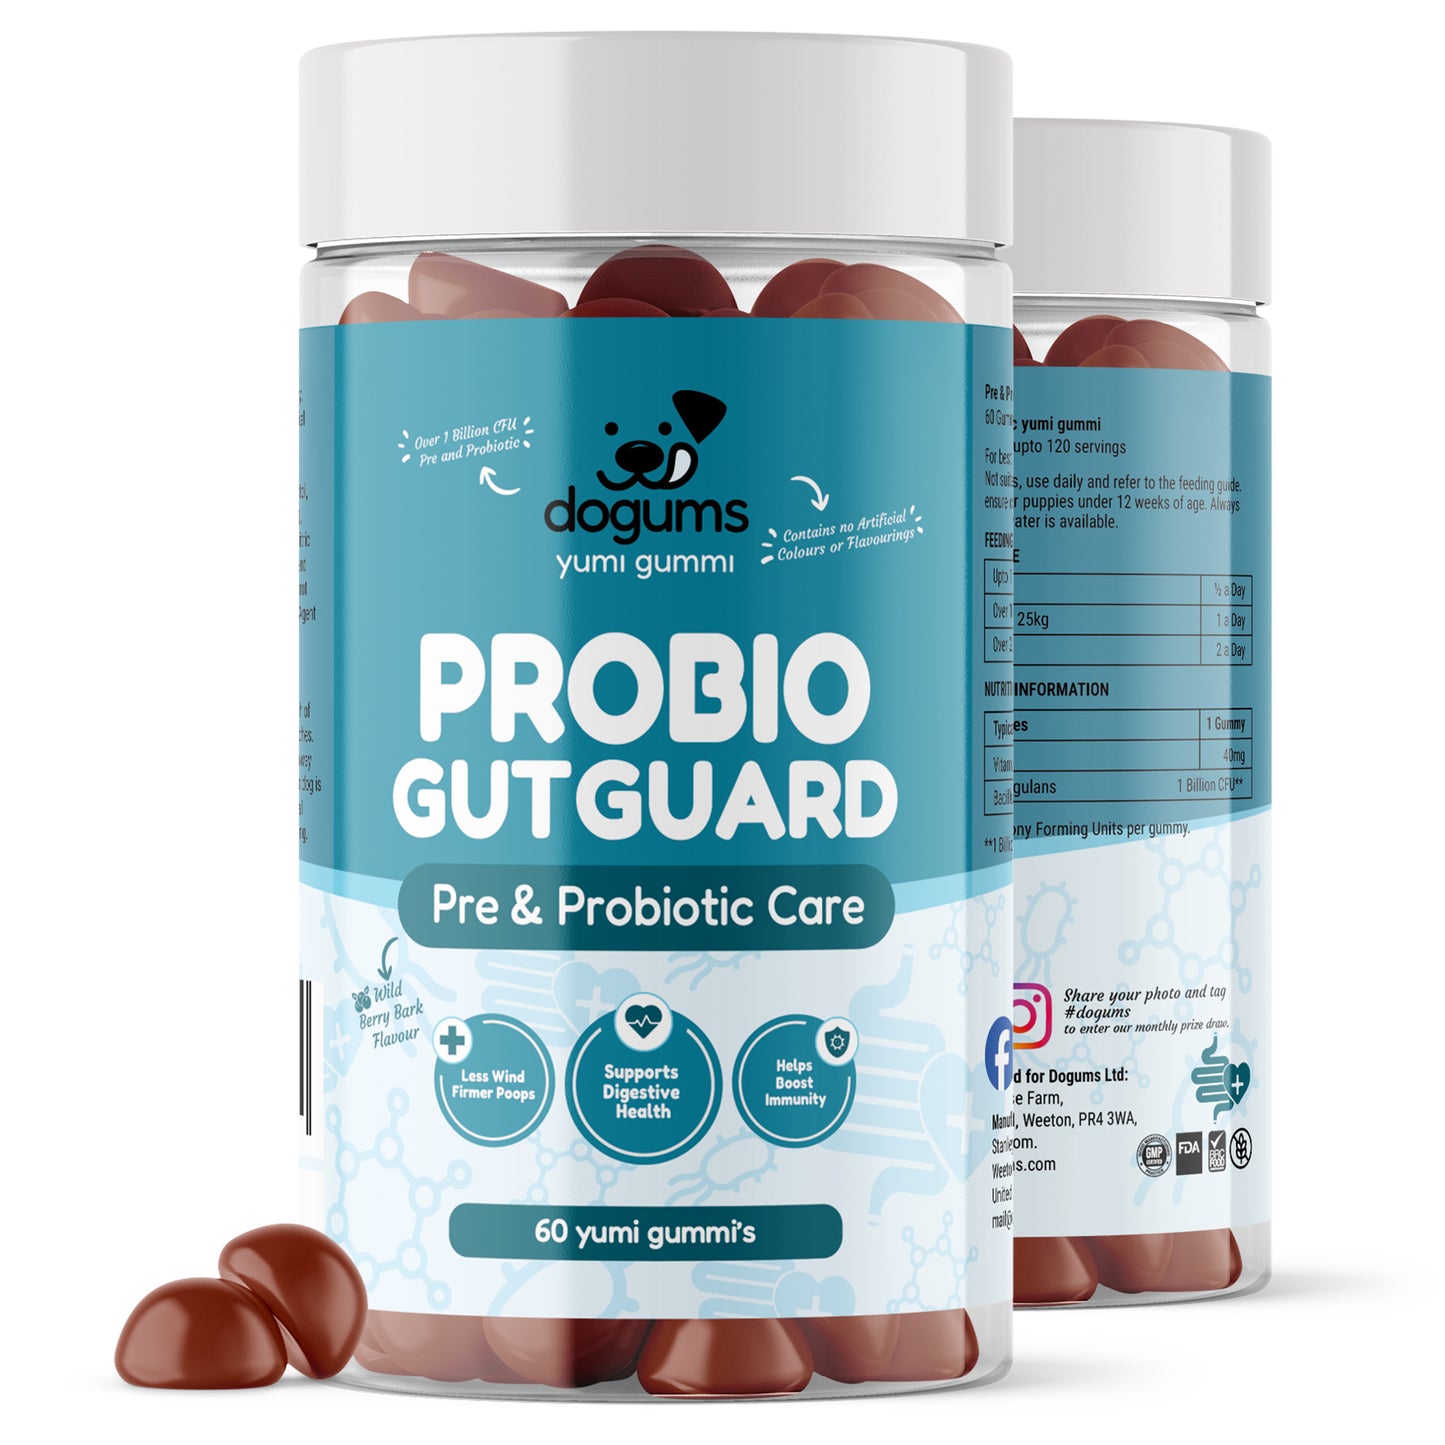 Pre & Probiotic Care